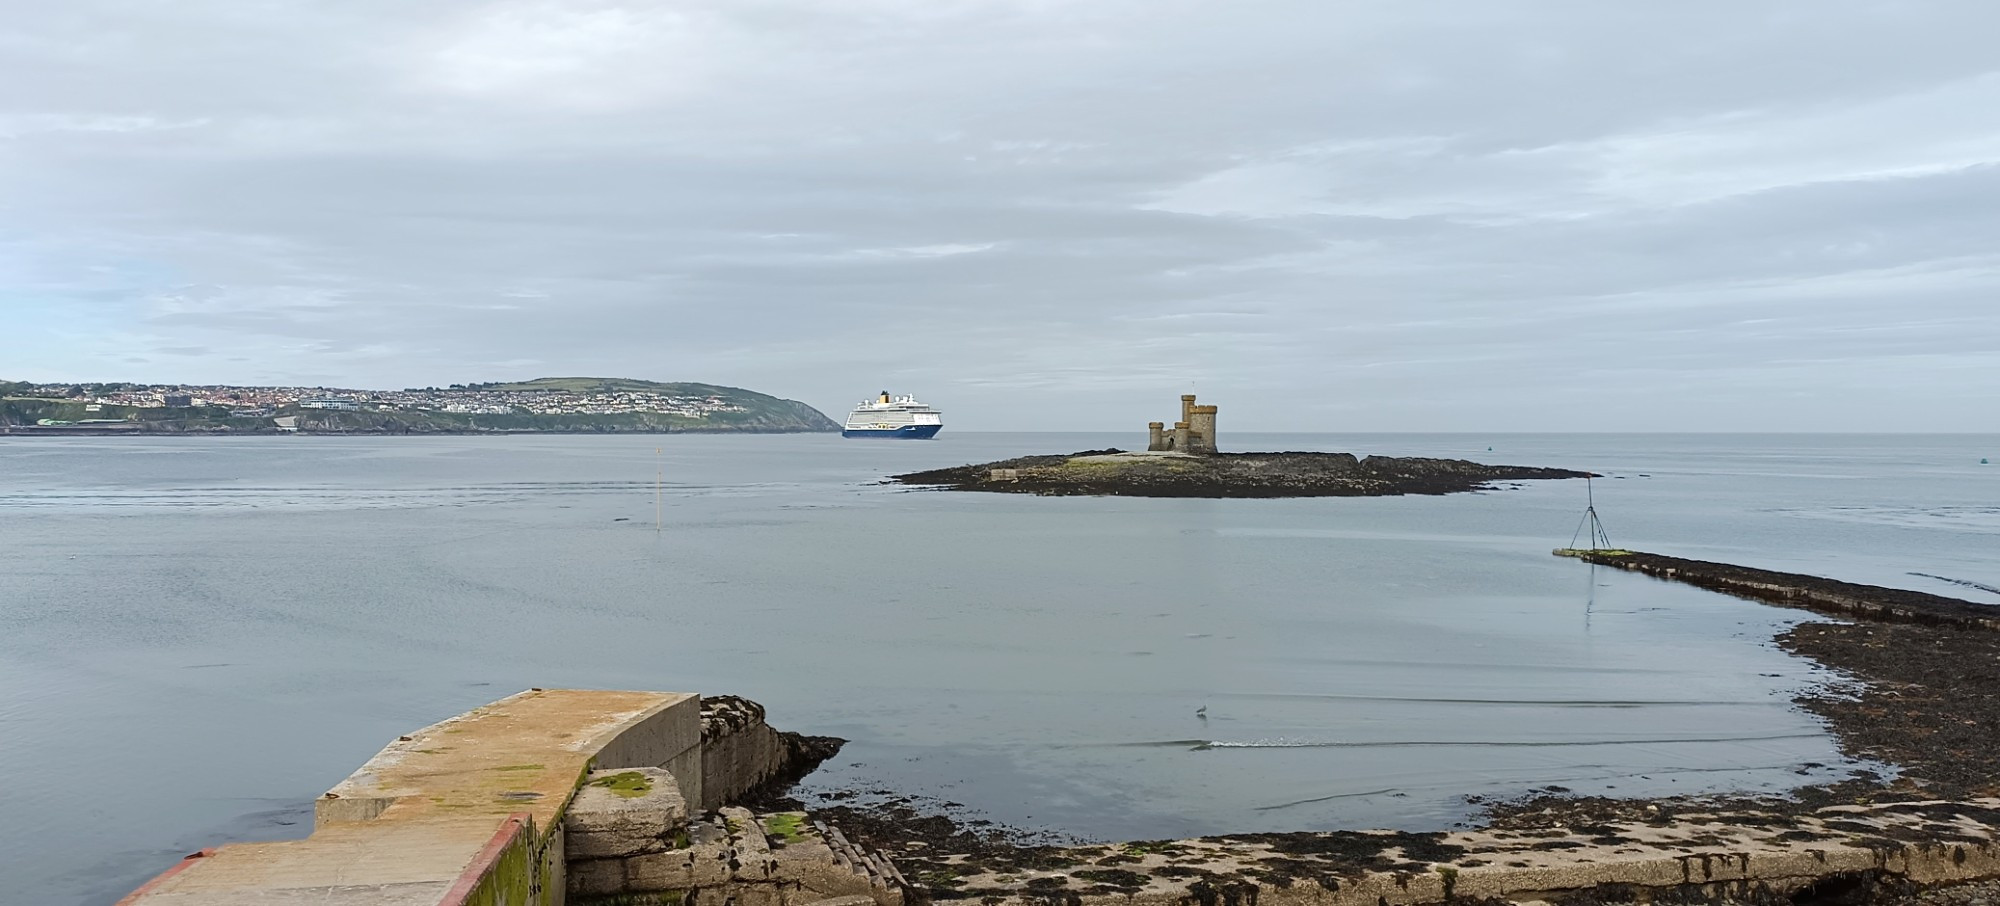 Tower of Refuge, Isle of Man